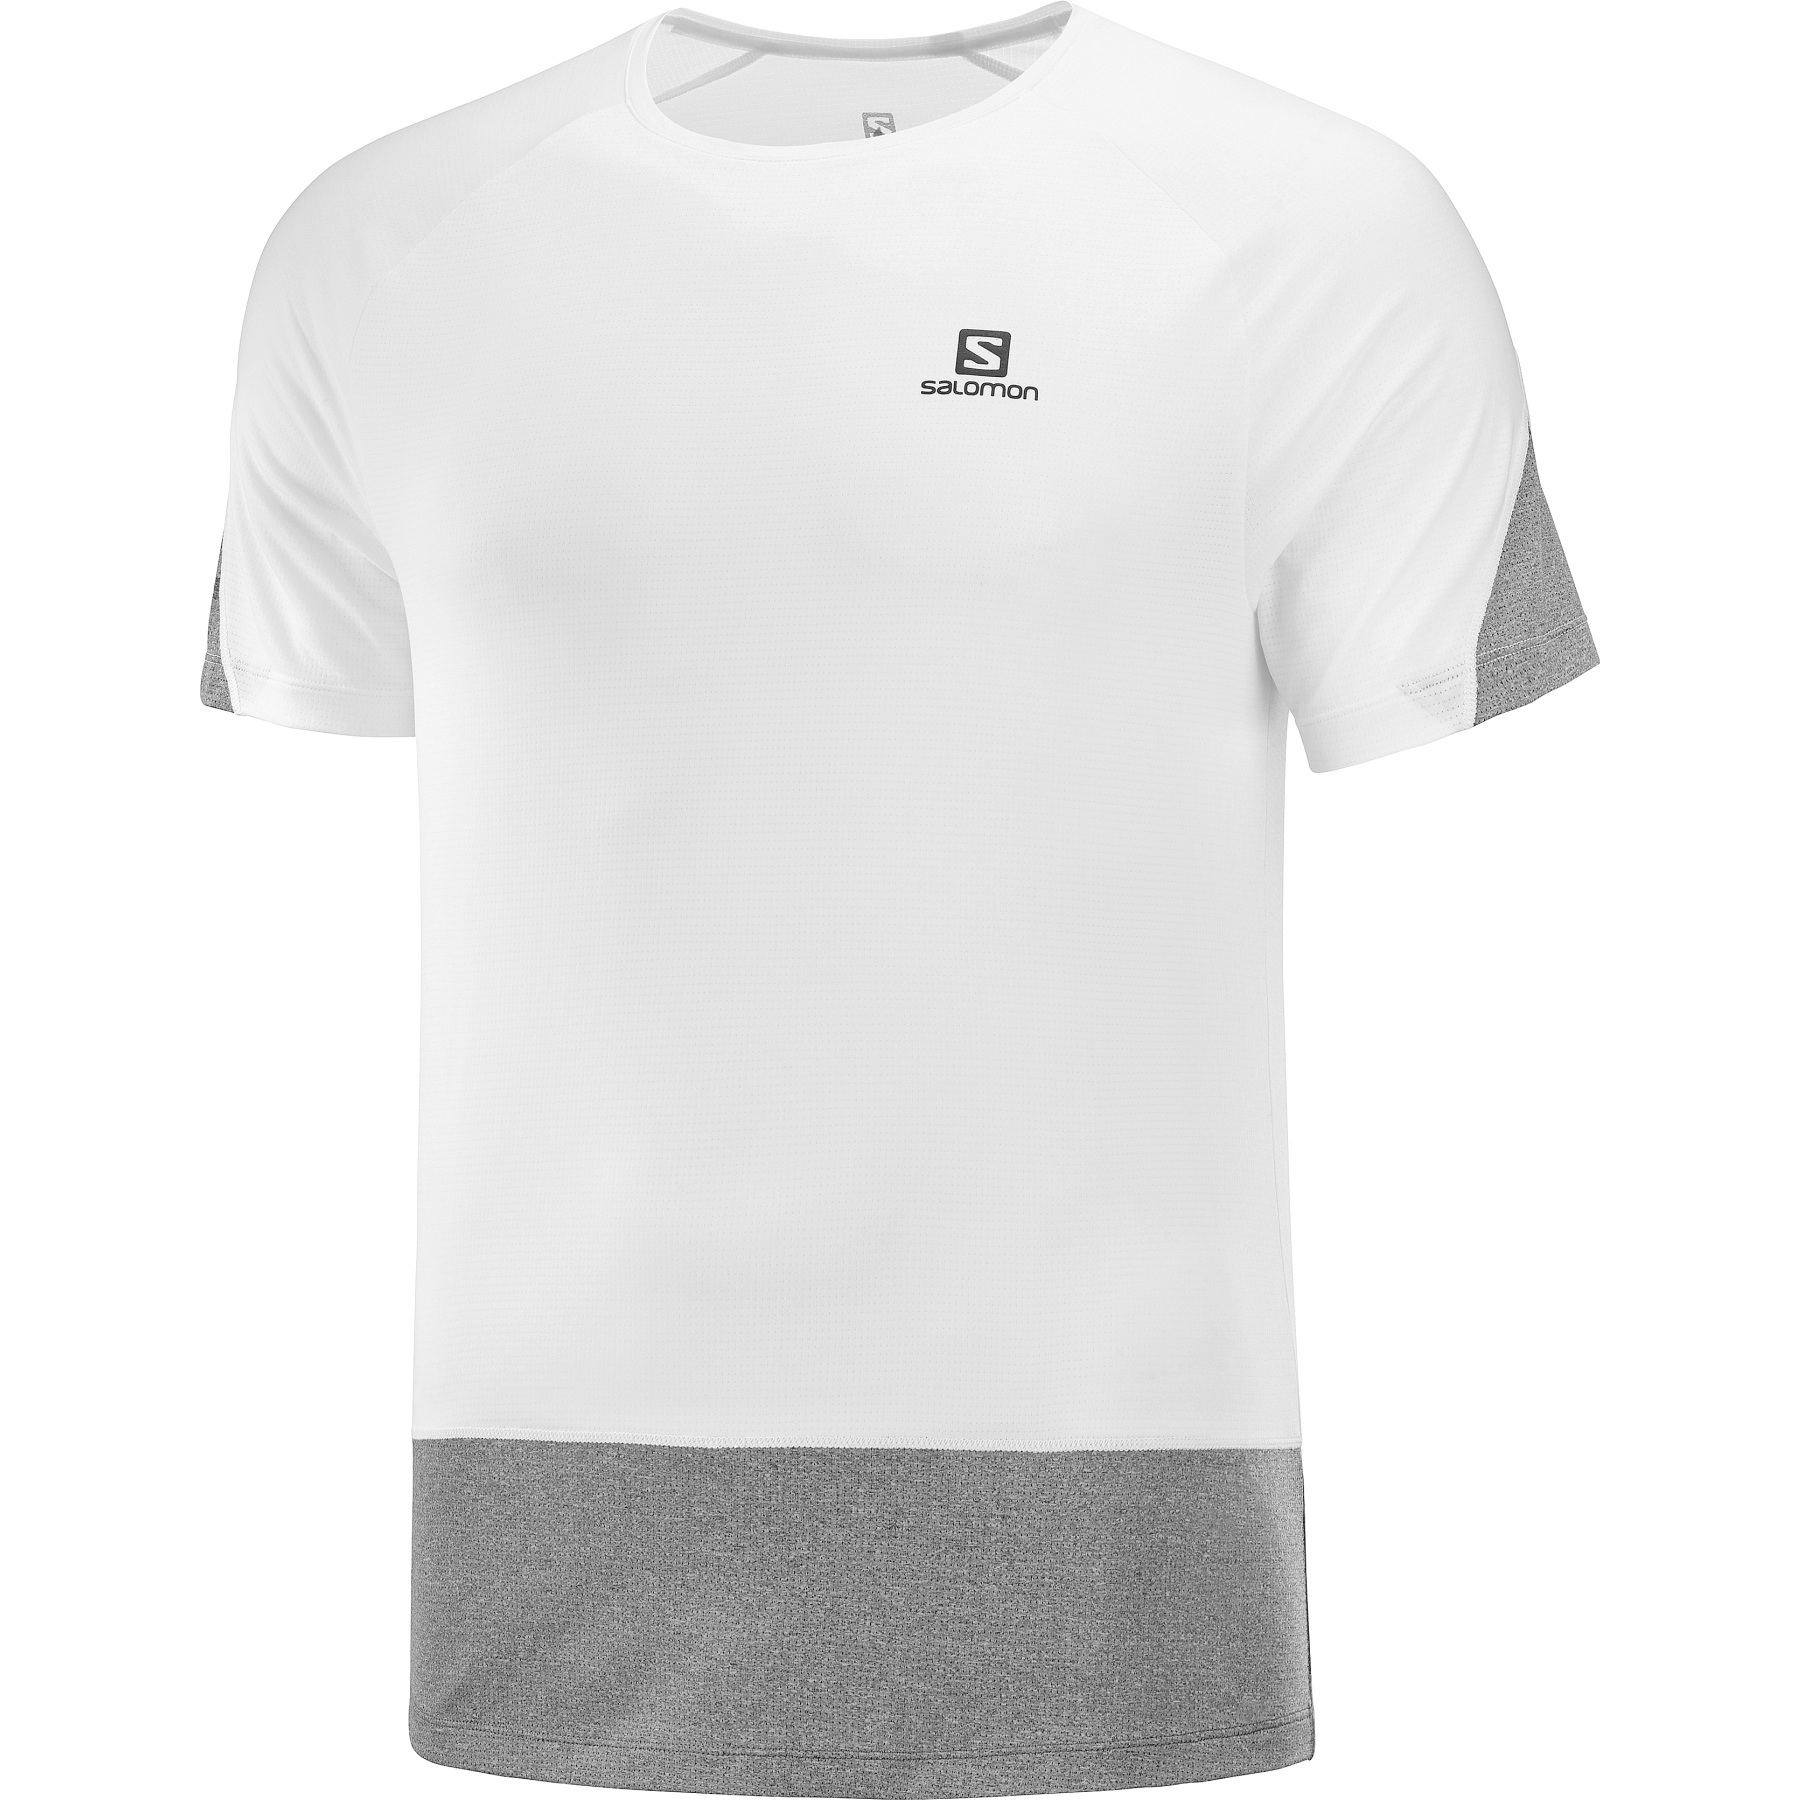 Productfoto van Salomon Cross Run T-Shirt - white/black/heather